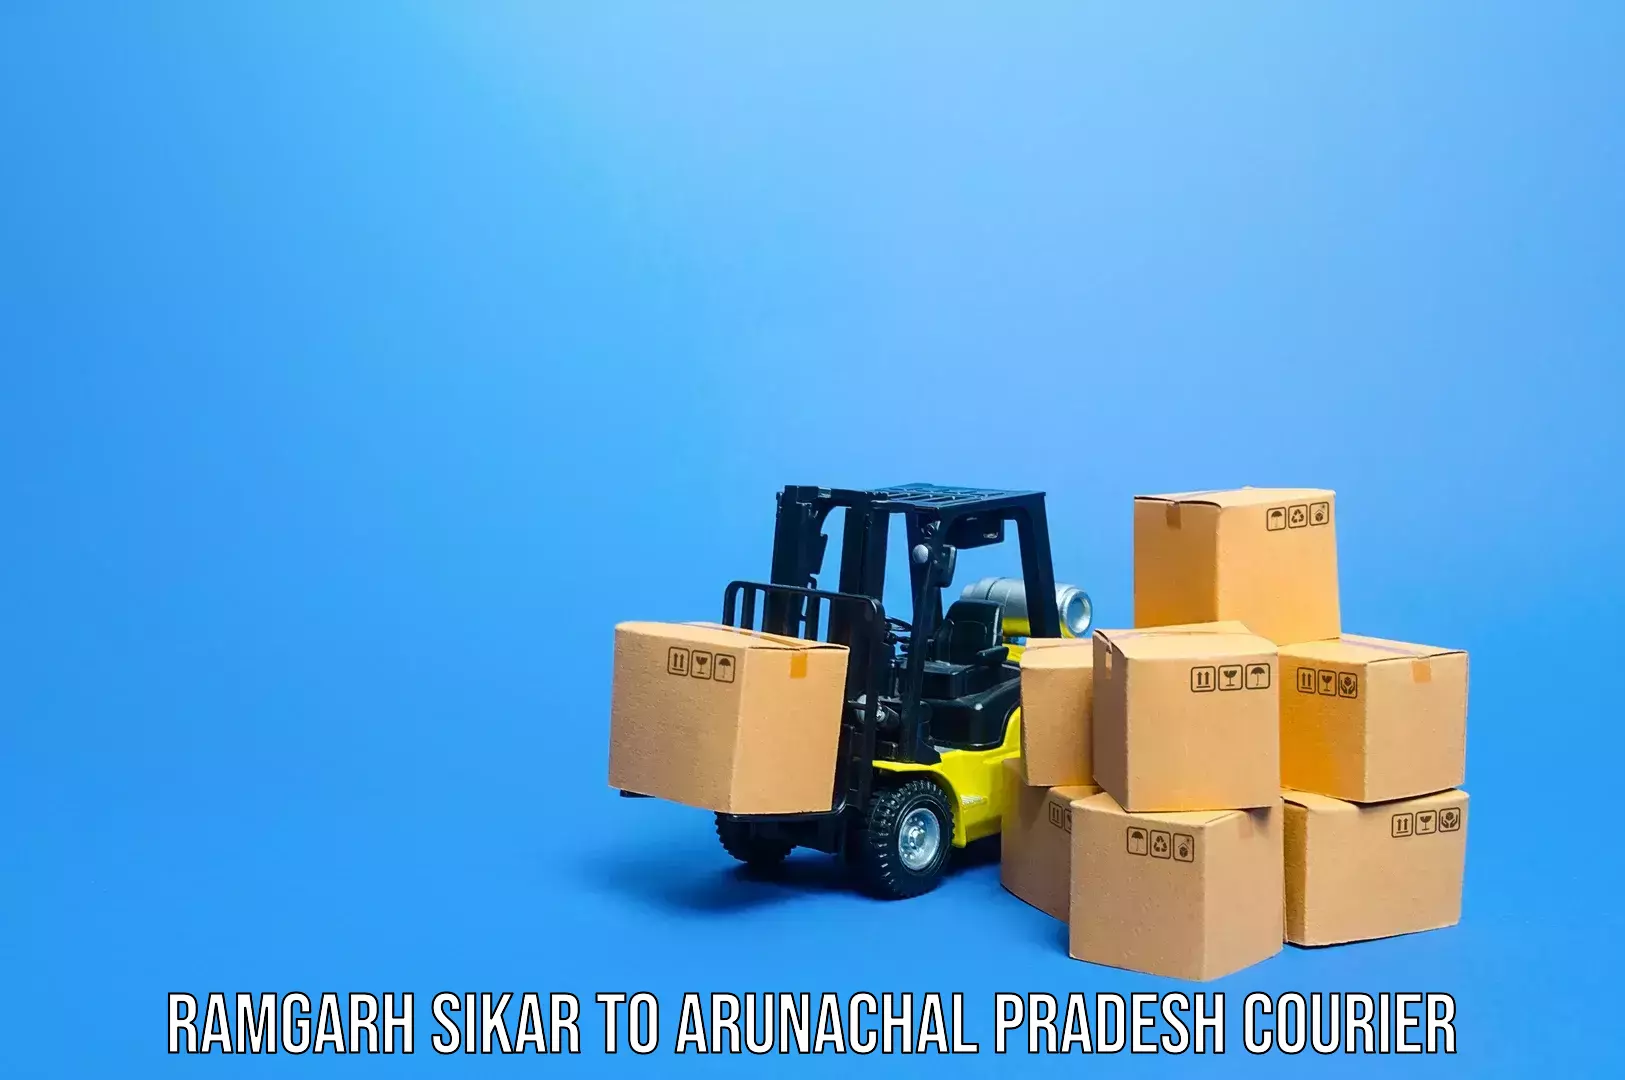 Luggage transport consultancy Ramgarh Sikar to Itanagar